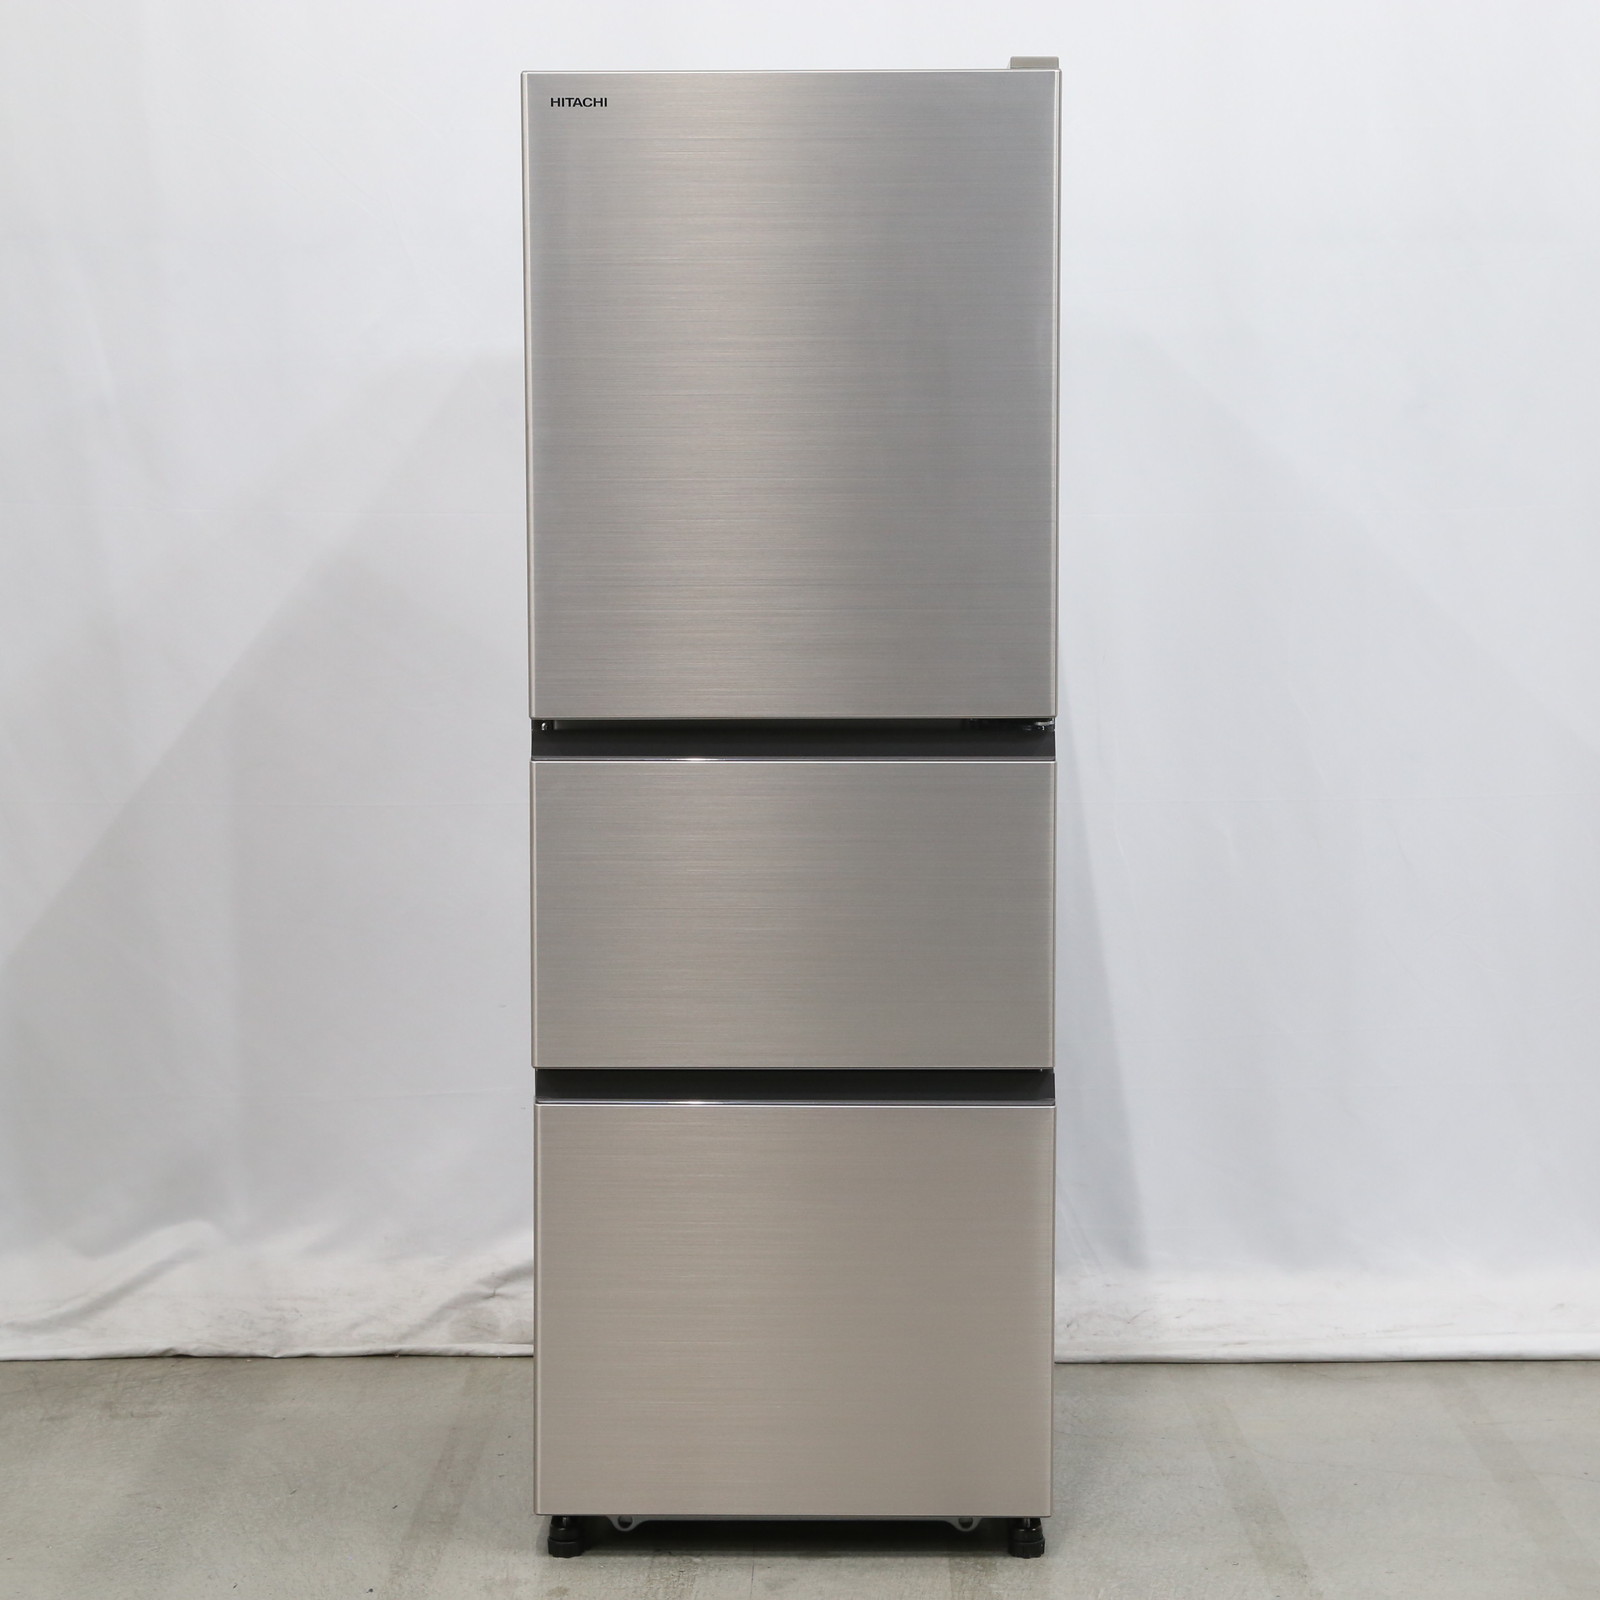 日立 冷蔵庫 R27-RV 右開き 美品 - 冷蔵庫・冷凍庫